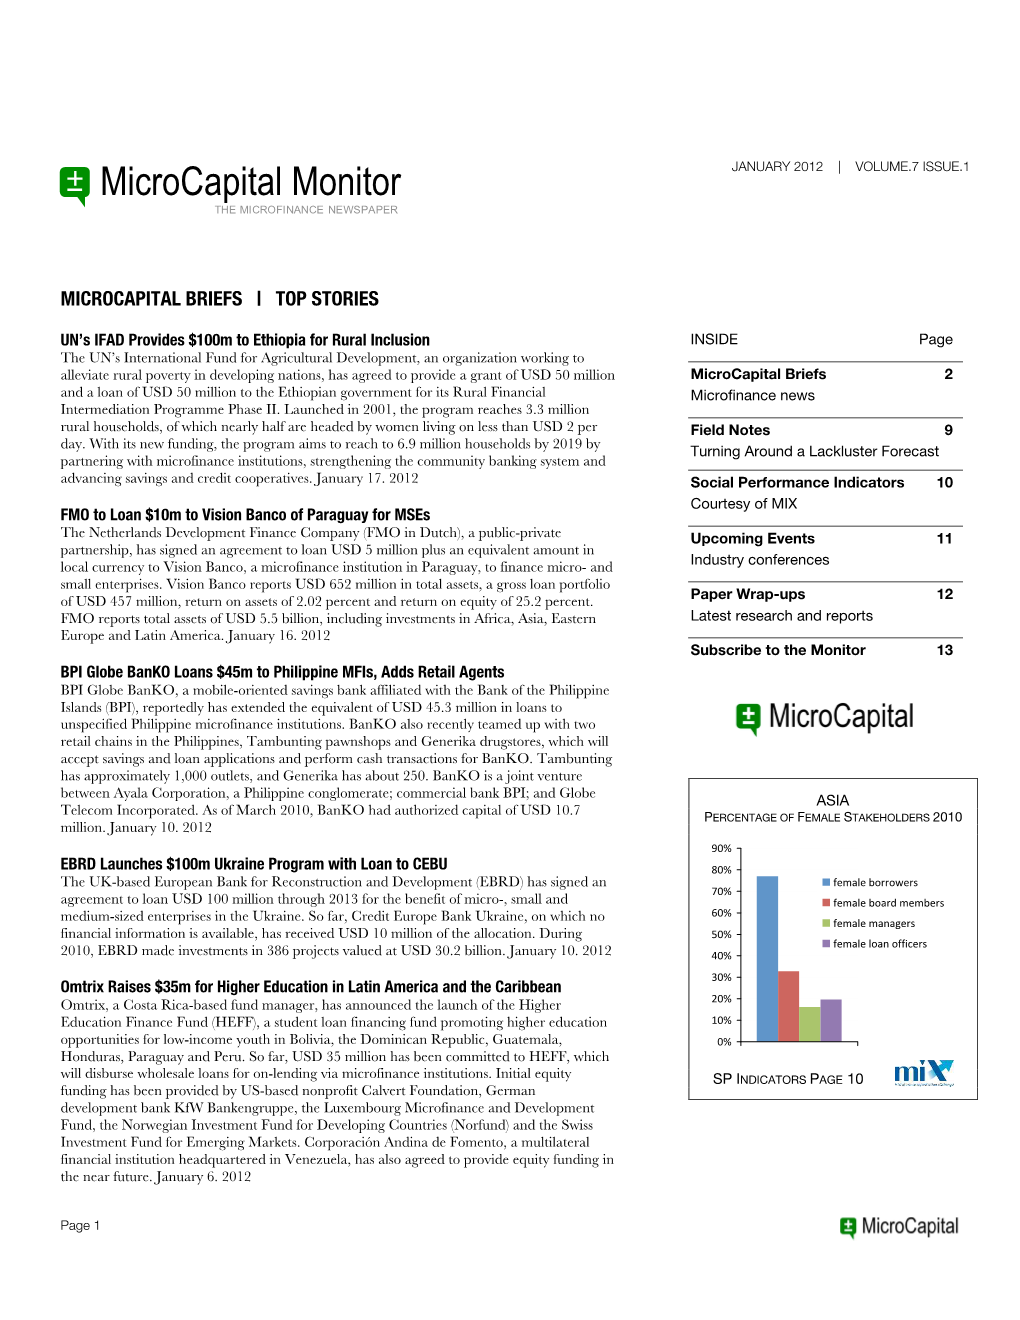 Microcapital Monitor JANUARY 2012 | VOLUME.7 ISSUE.1 the MICROFINANCE NEWSPAPER